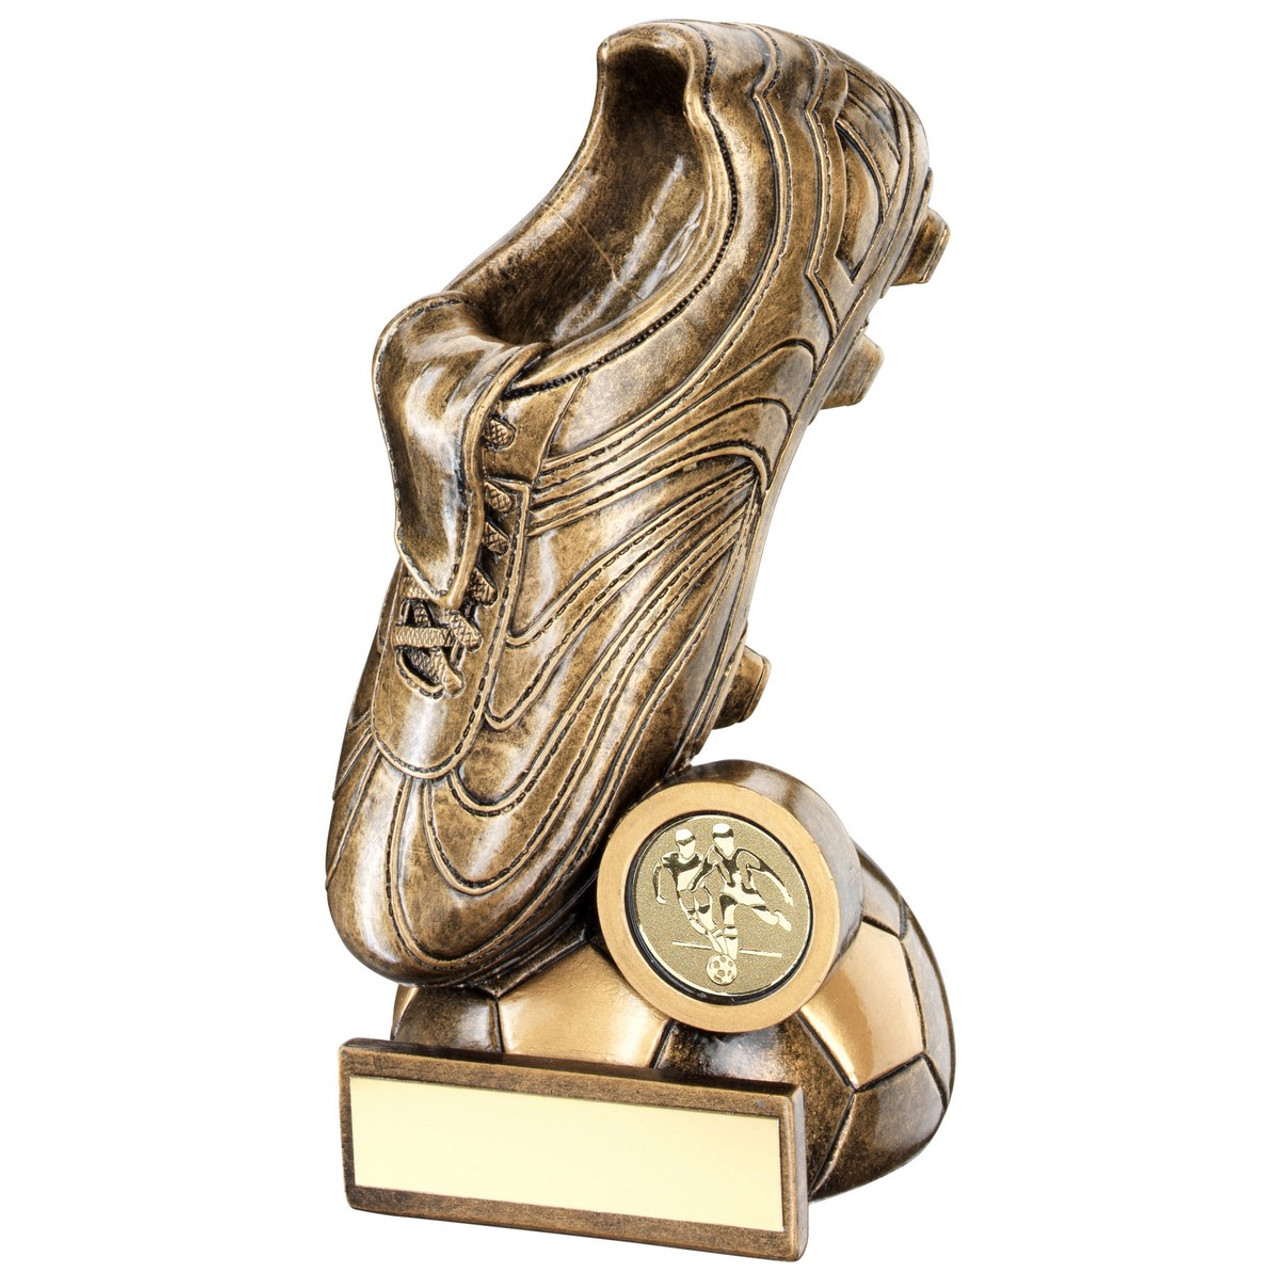 Full 3D Bronze gold football boot award with football insert